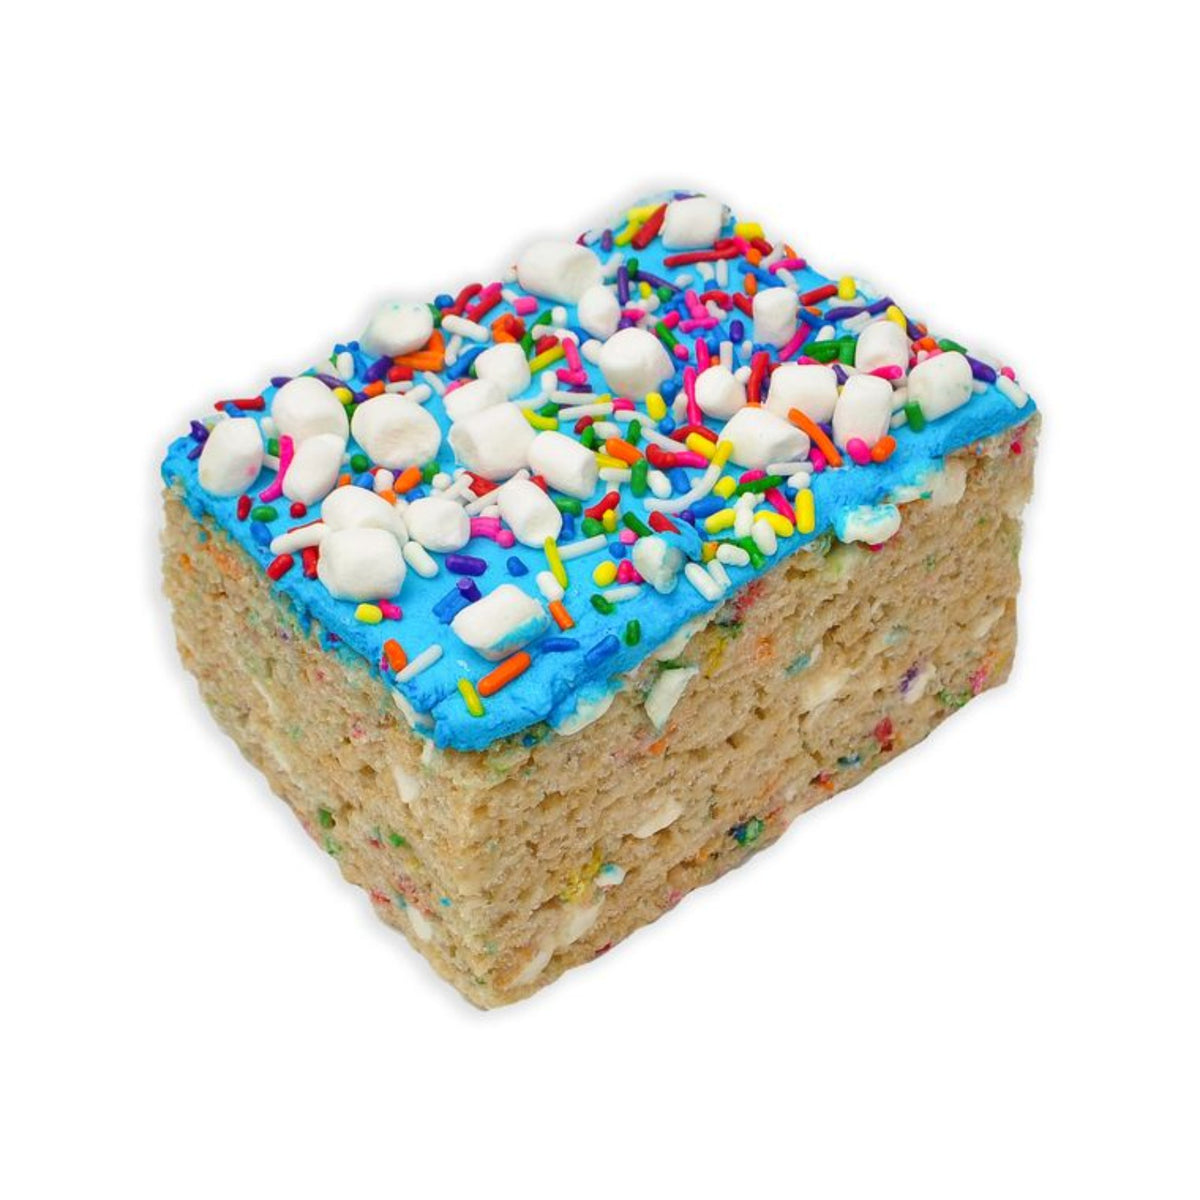 Rice cake/ Sponge cake - YouTube